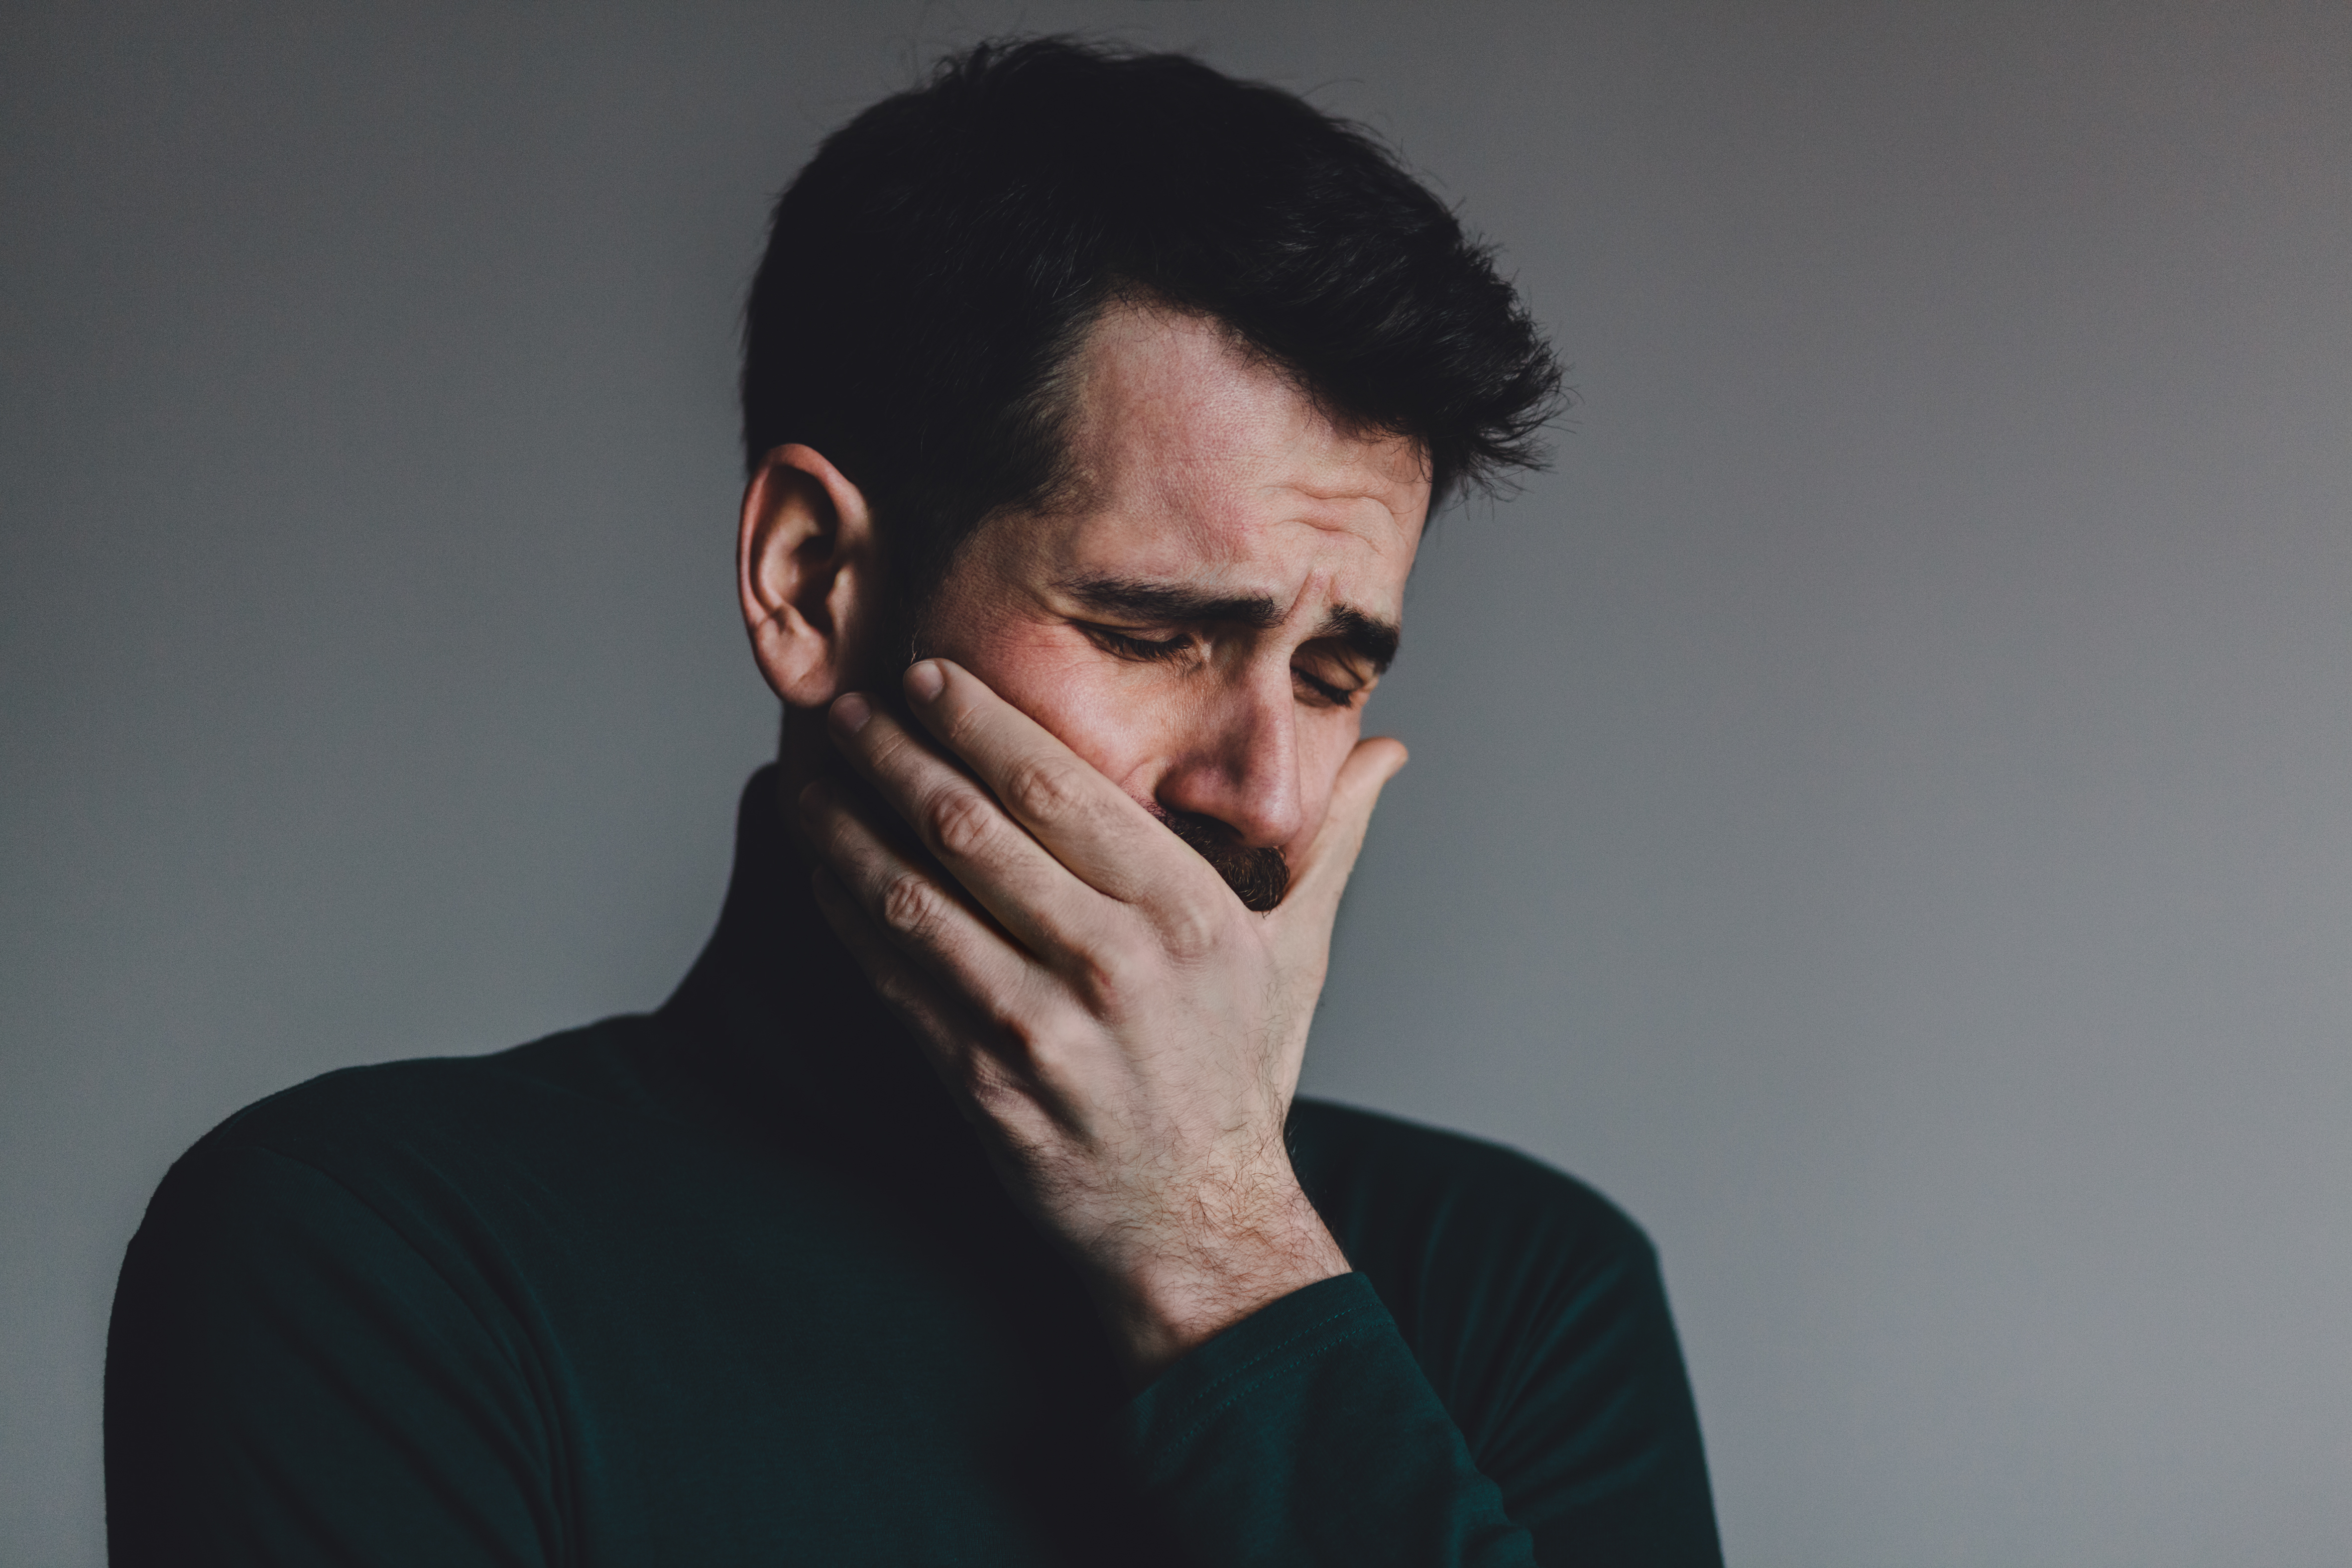 Un hombre llorando | Fuente: Shutterstock